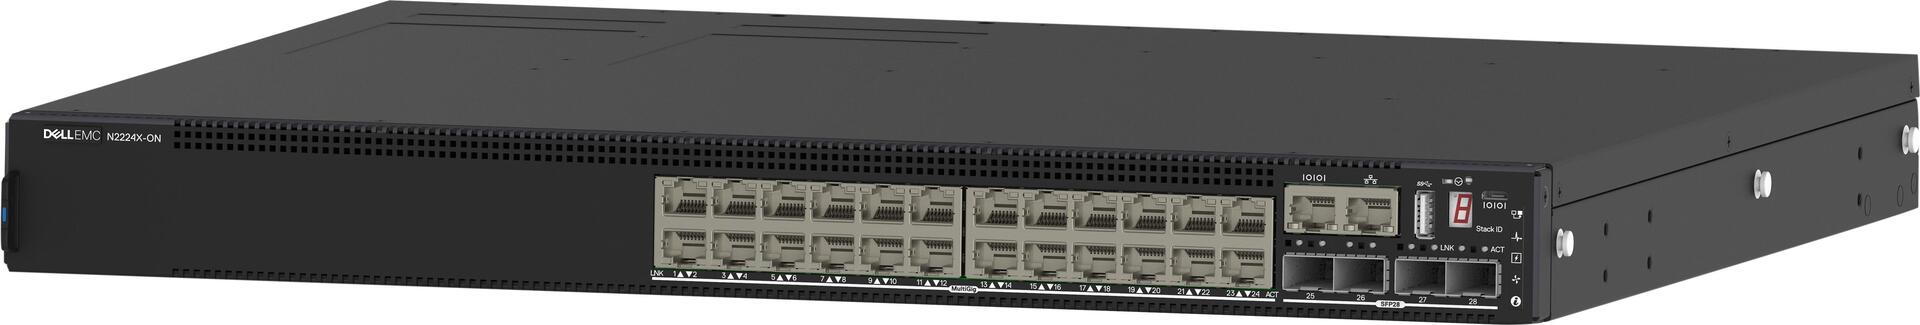 Dell EMC Networking N2224X-ON PowerSwitch (210-ASPJ)